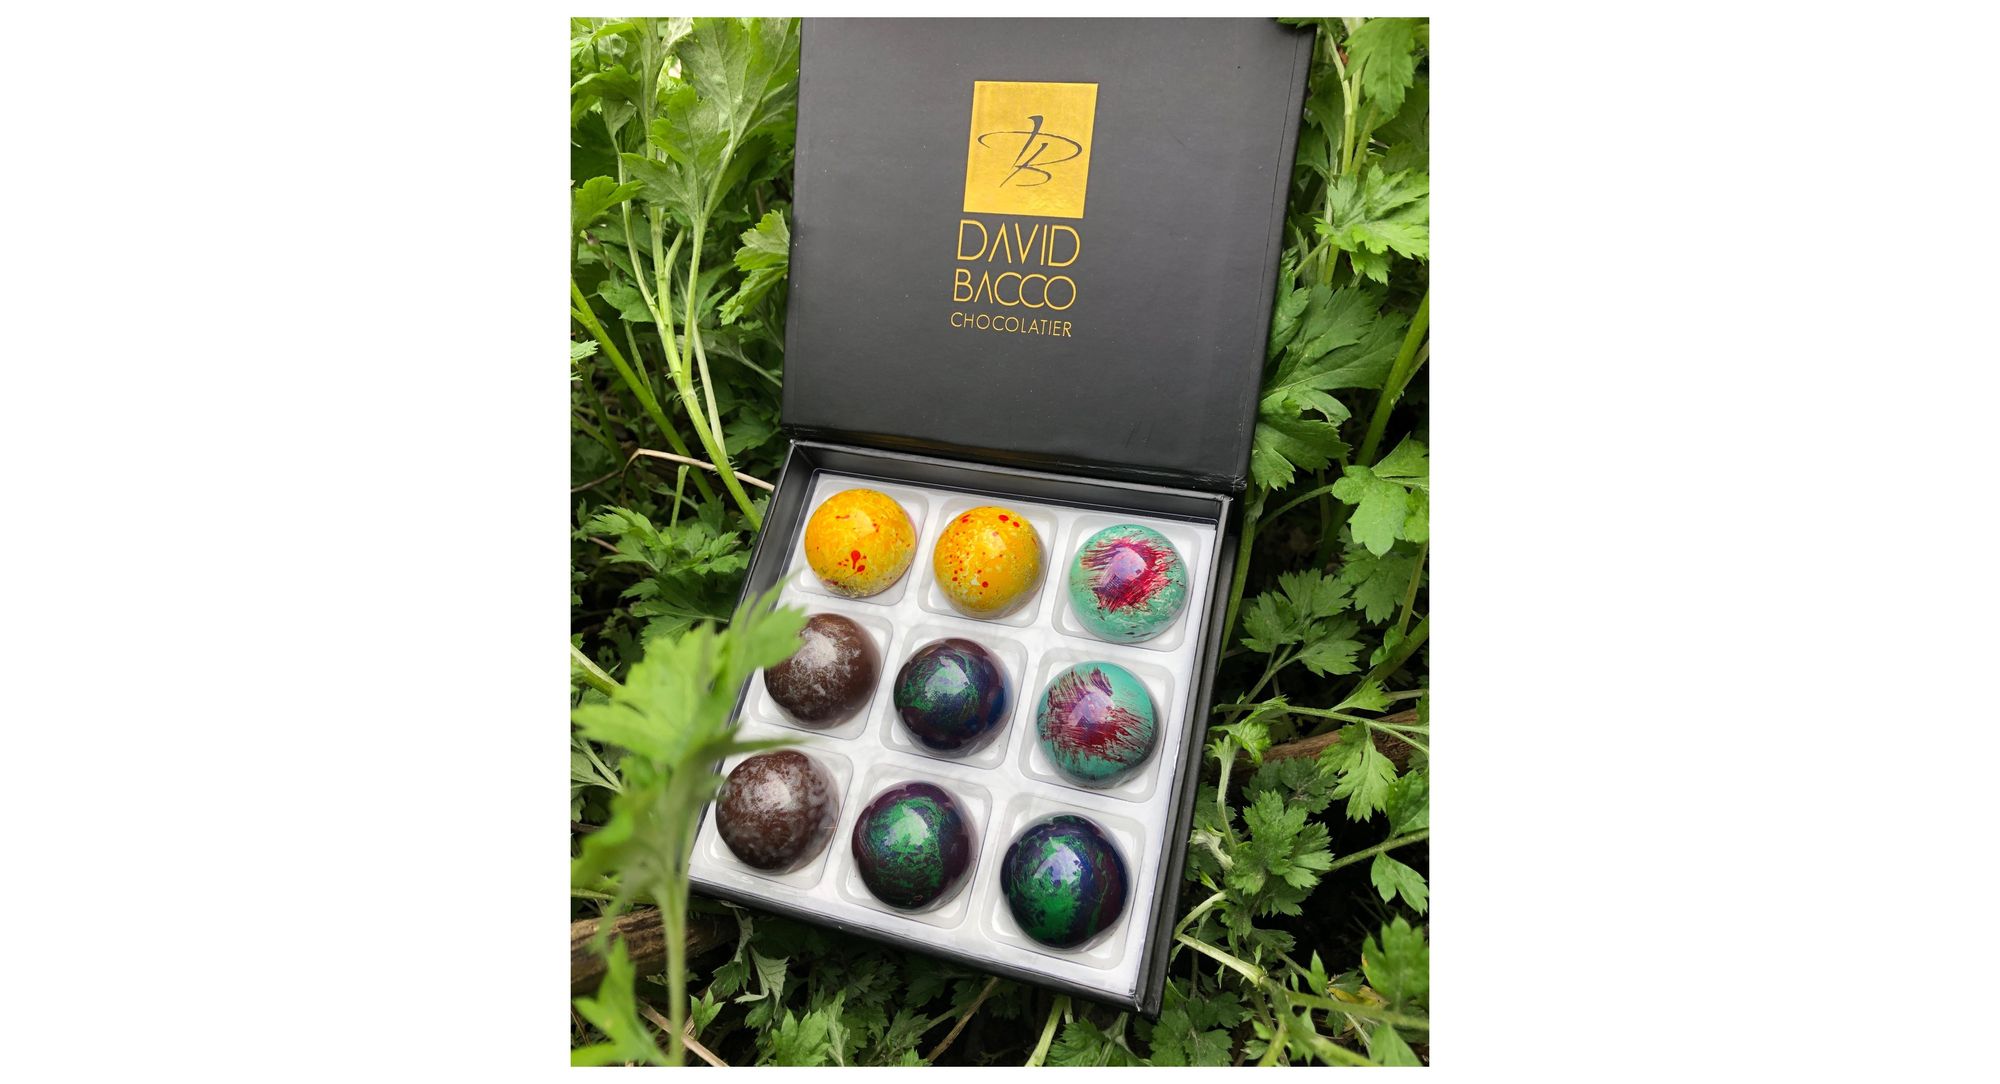 Handmade Artisan Chocolates - David Bacco Chocolatier